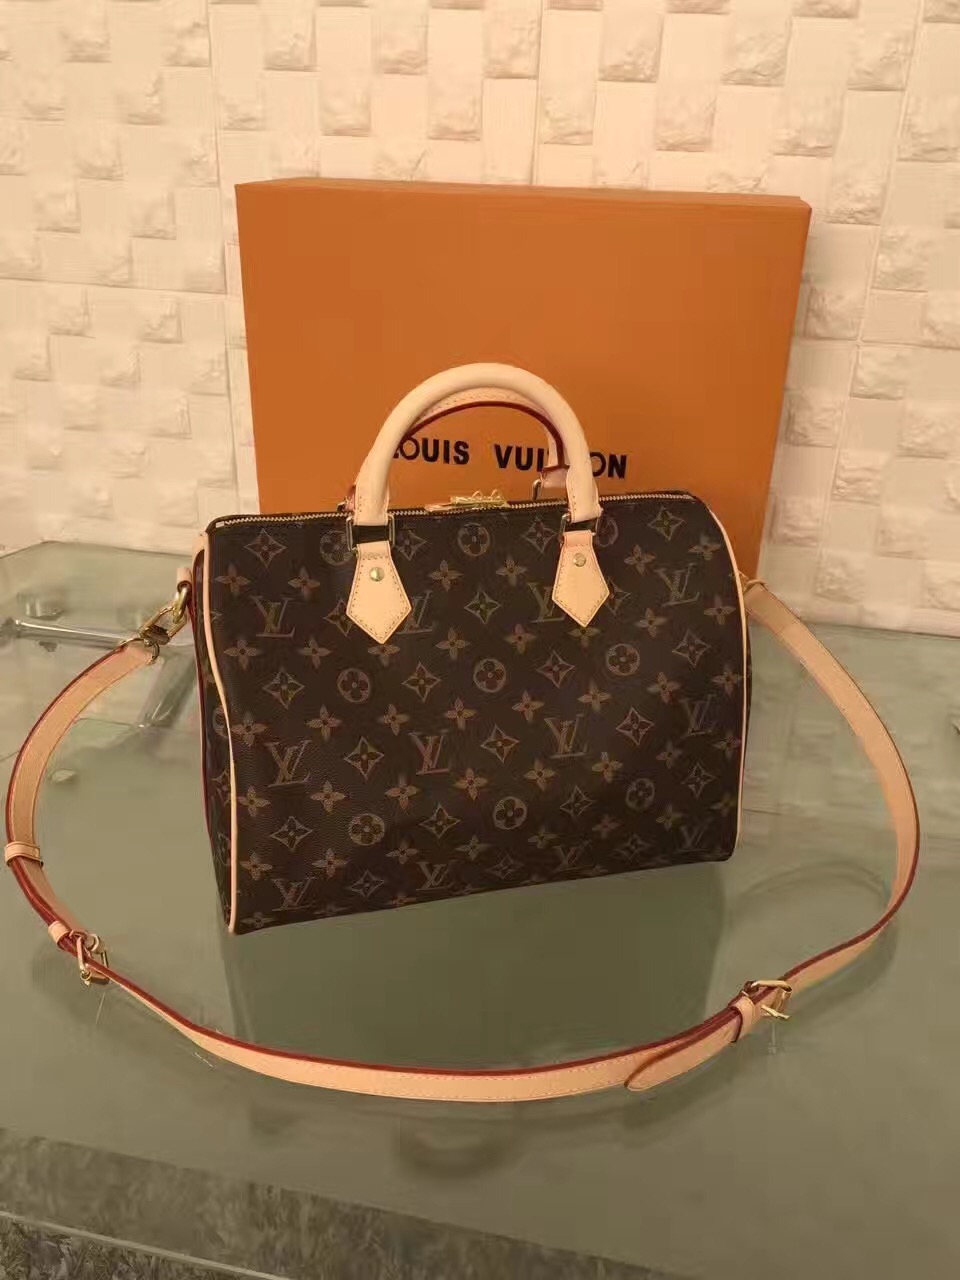 LV Louis Vuitton 30cm speedy monogram shoulder handbags [LV398] - $296. ...